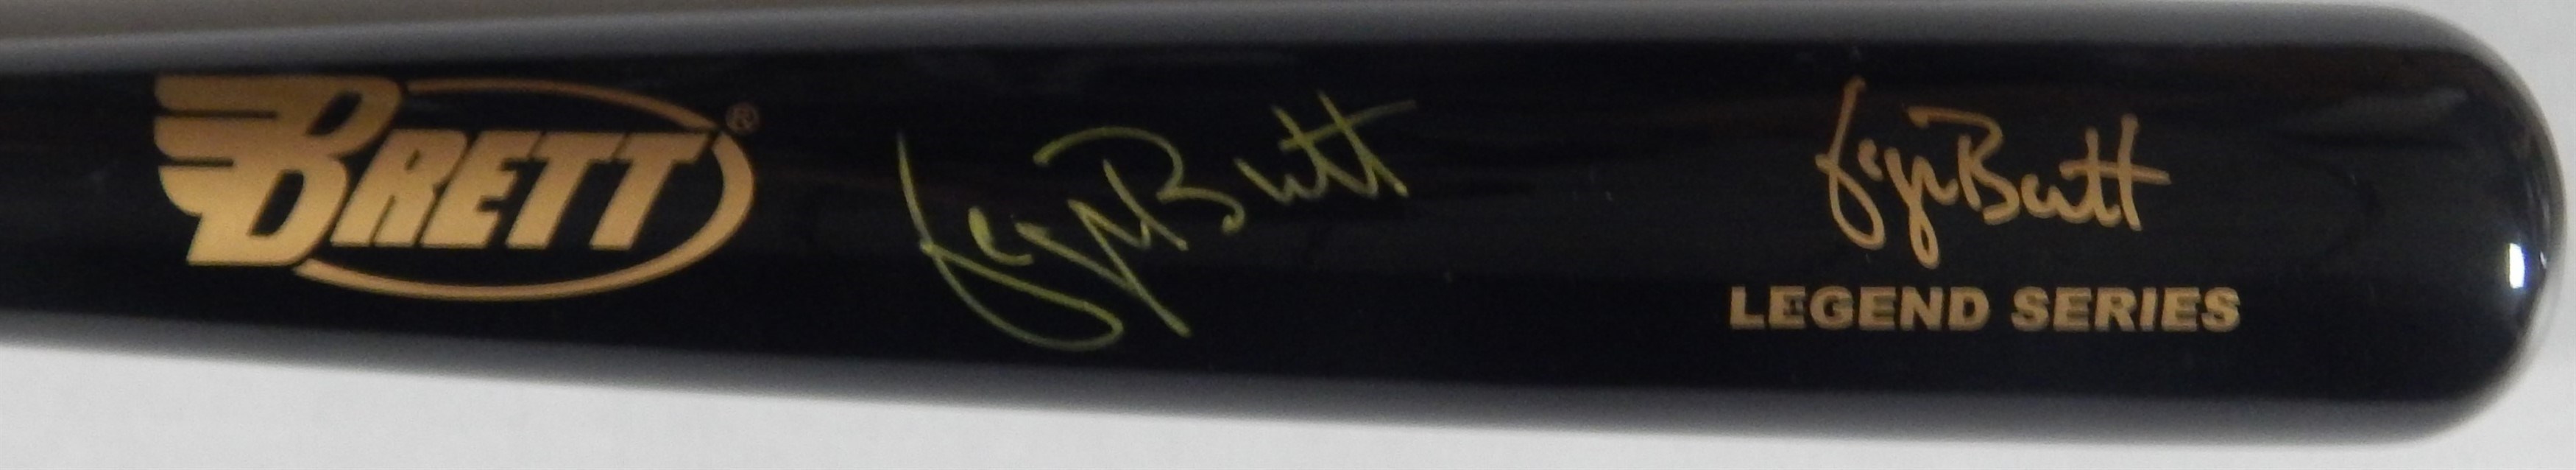 George Brett Signed Bat